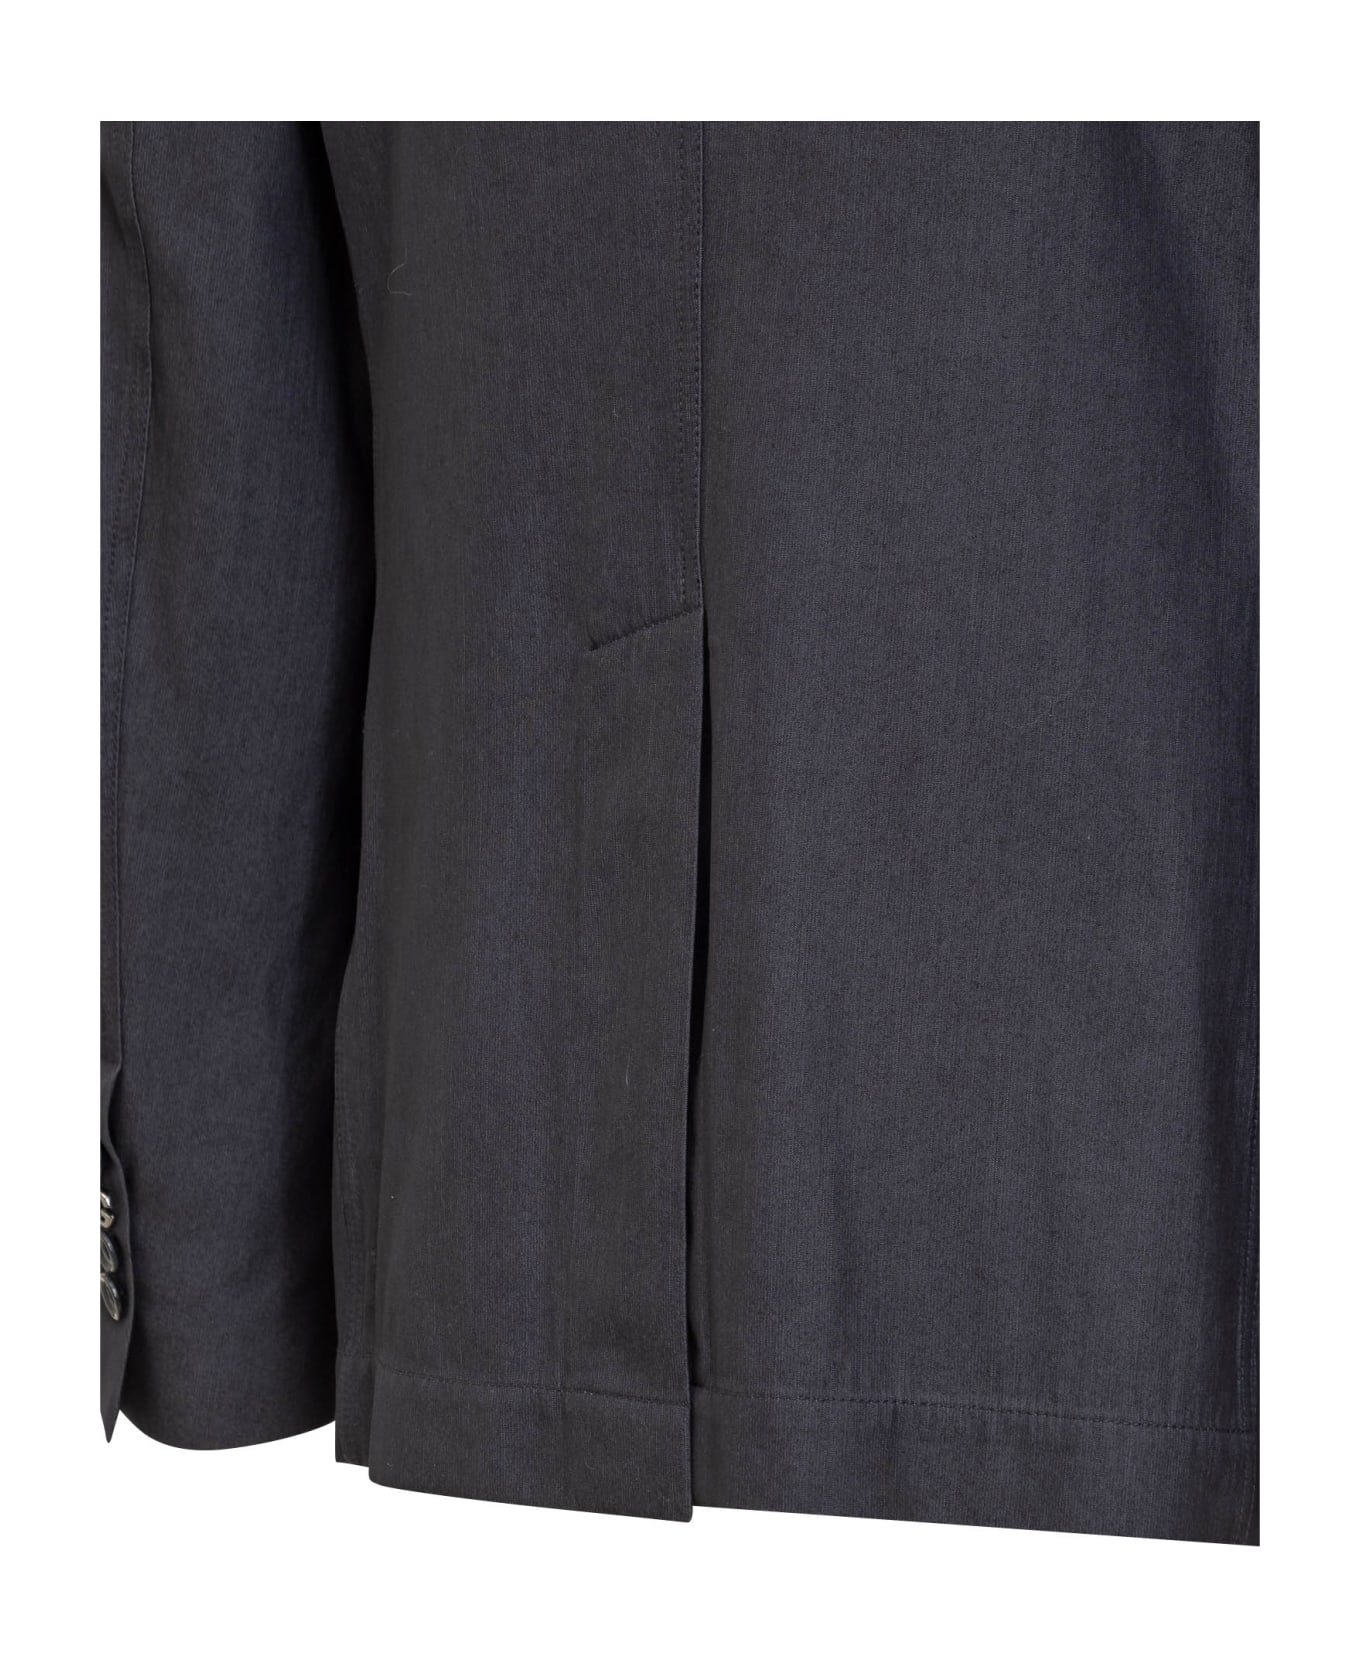 Dolce & Gabbana Patched Pocket Plain Jacket - BLU SCURISSIMO 2